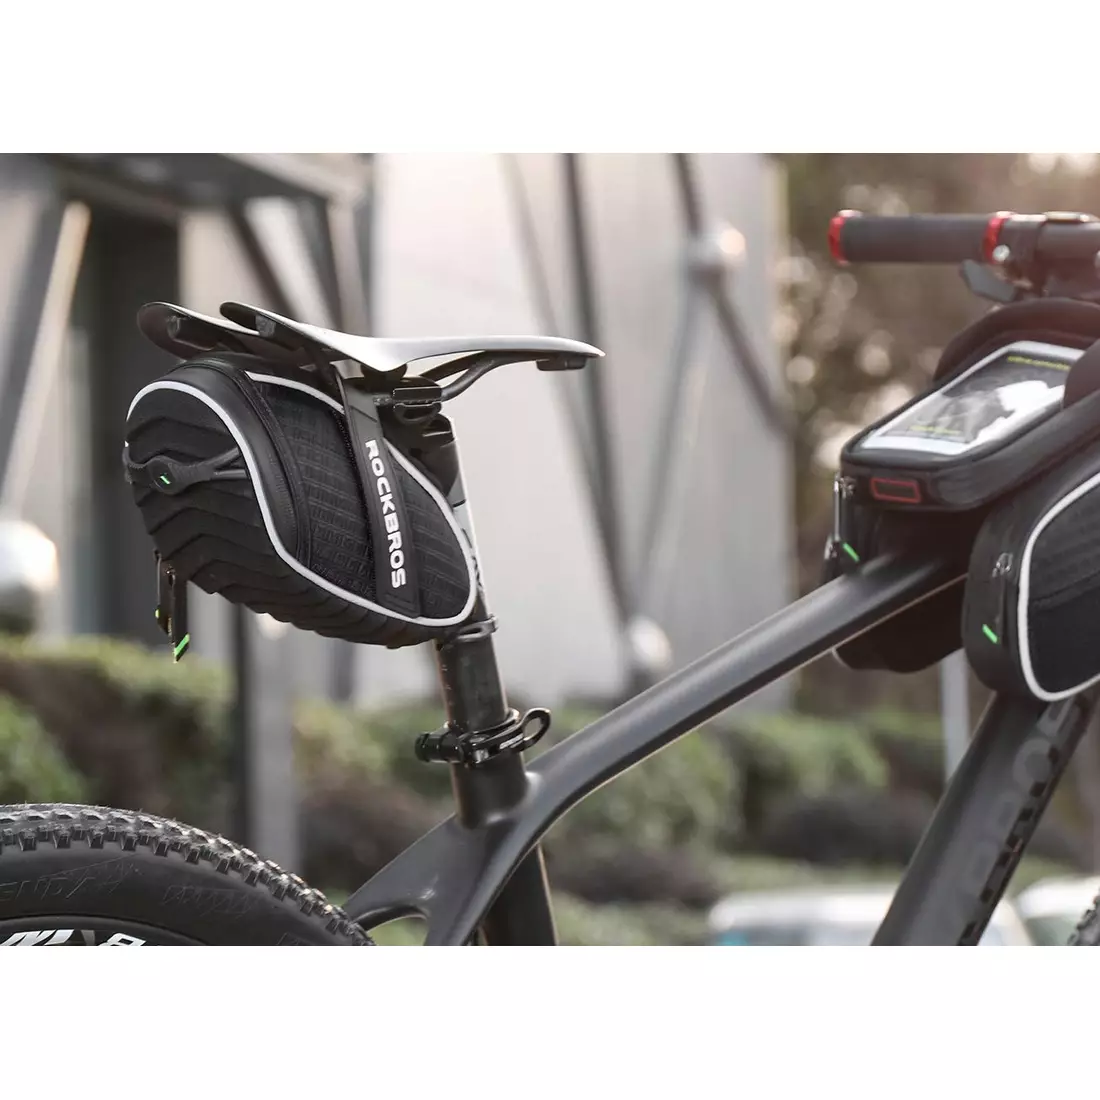 Rockbros Sedlová taška na bicykel na suchý zips, čierna C16-BK